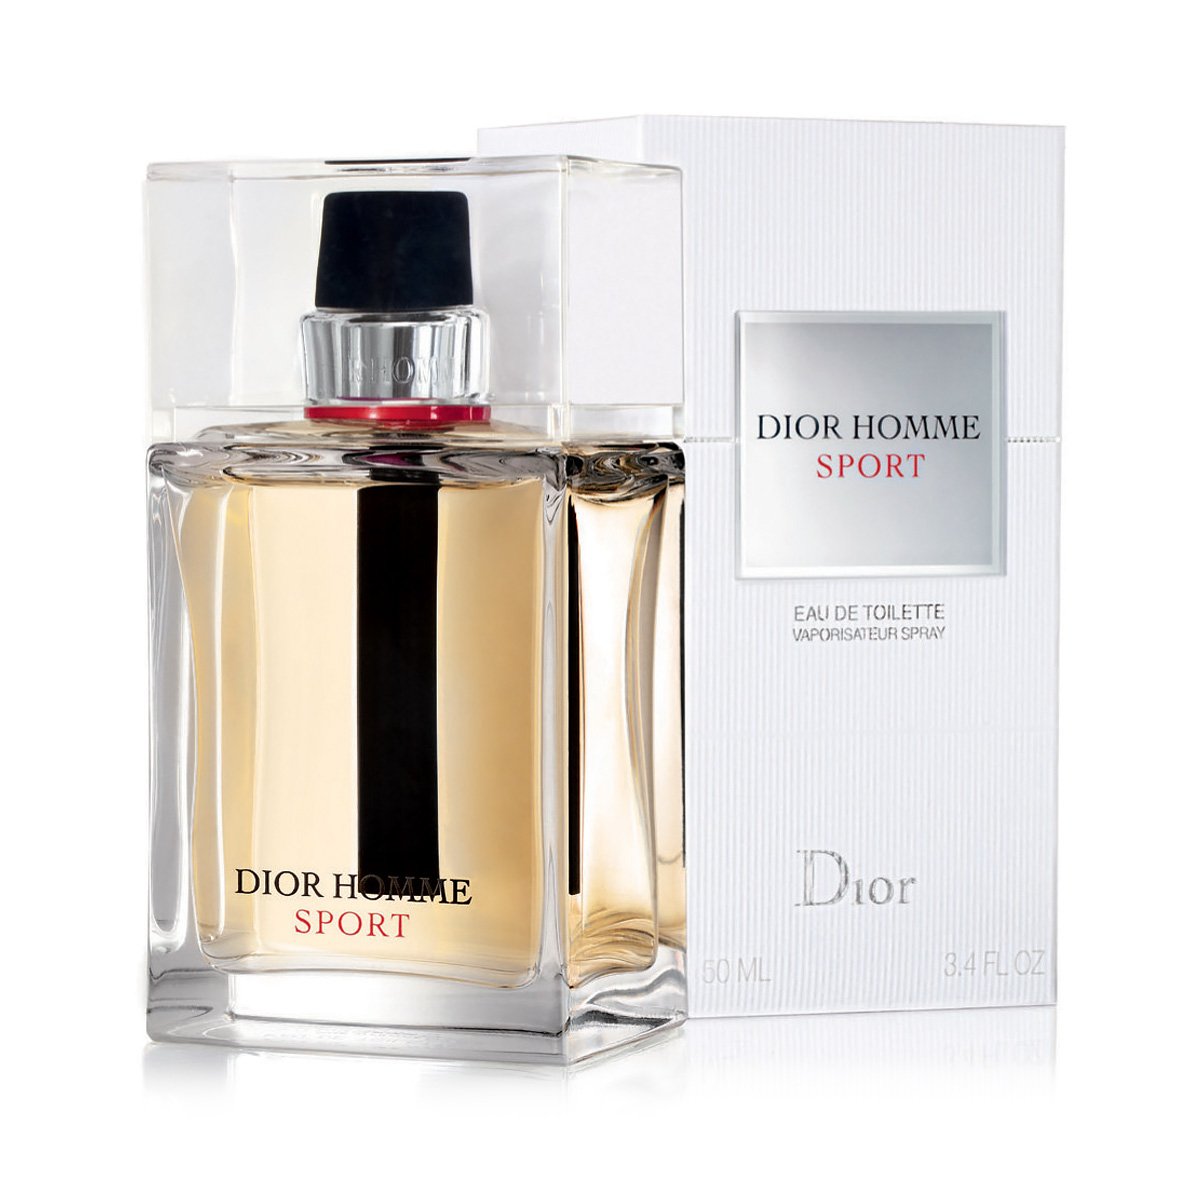 Home sport 1. Christian Dior Dior homme Sport 2017. Dior homme Sport 100ml. Christian Dior Dior homme Sport 100ml. Туалетная вода Christian Dior "Dior homme Sport", 100 ml.